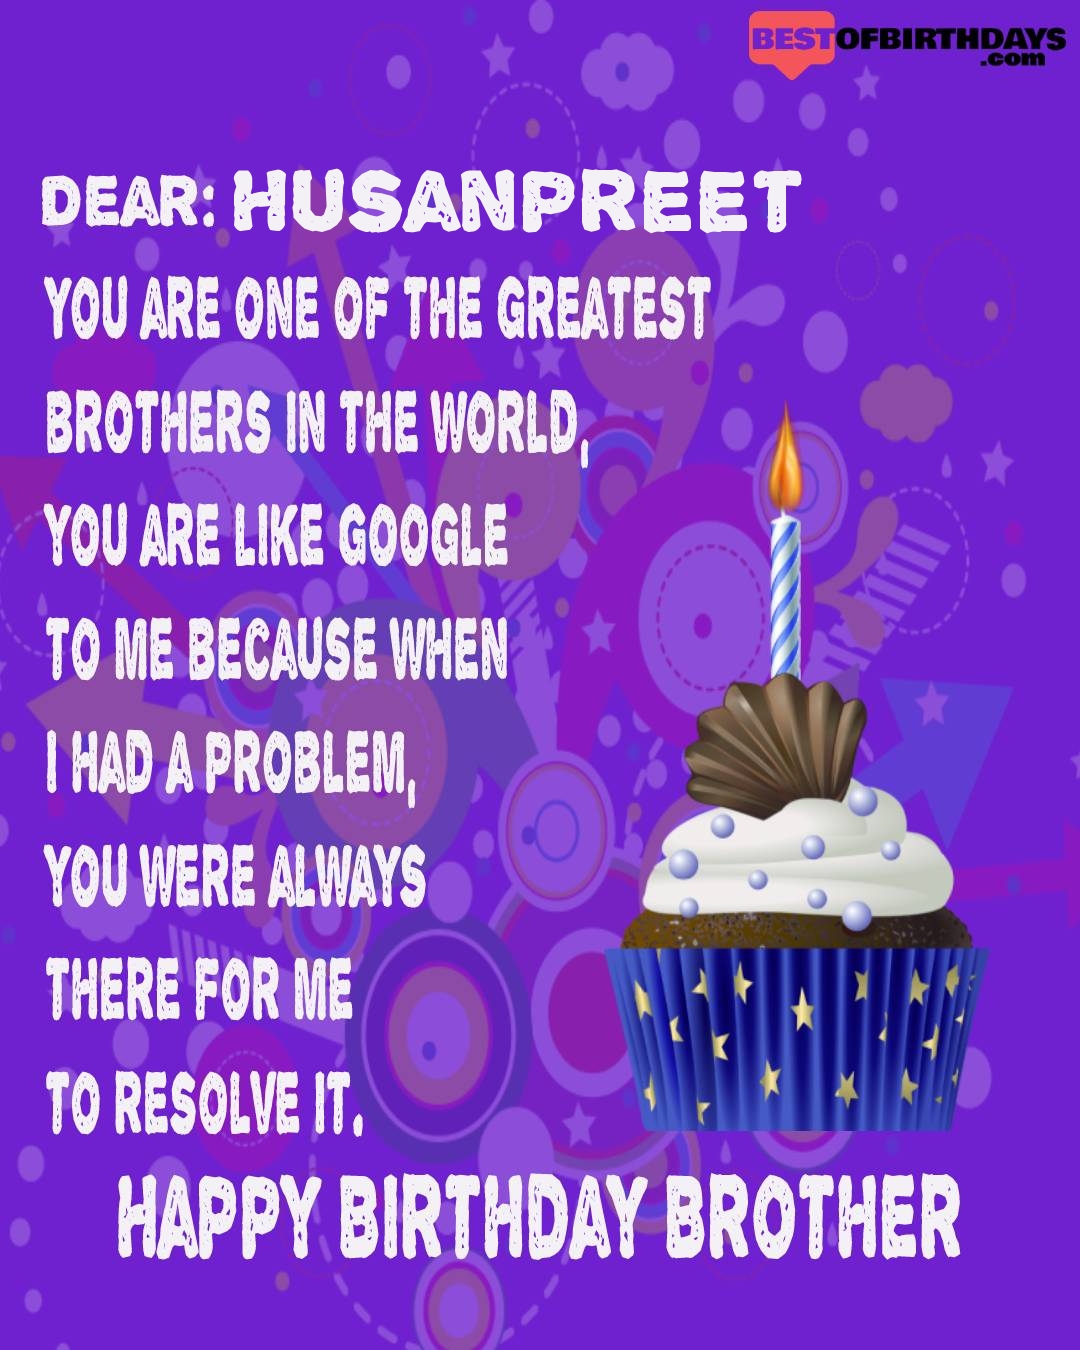 Happy birthday husanpreet bhai brother bro